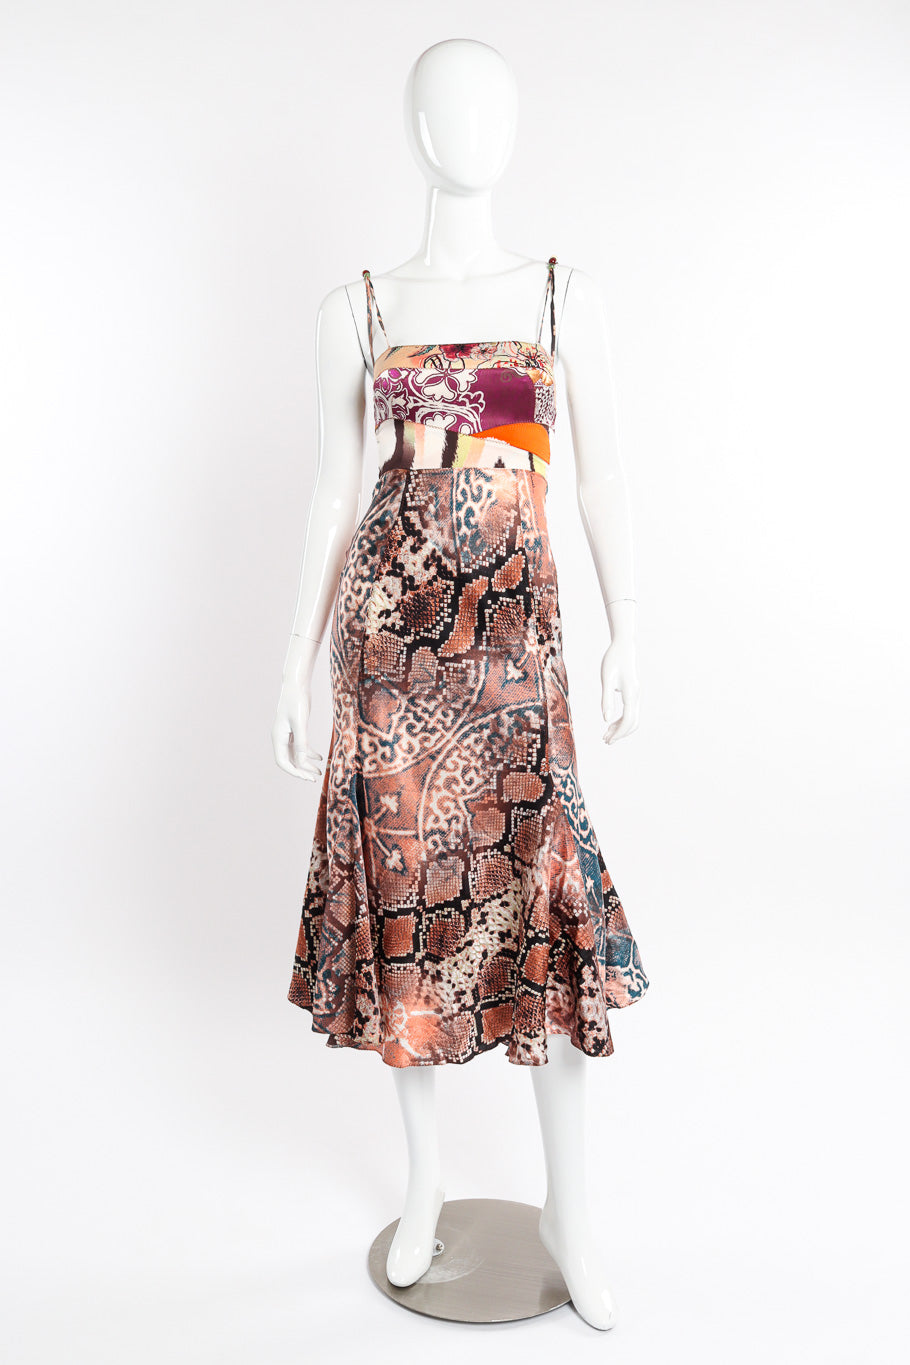 Just Cavalli Patchwork Bias Silk Dress front view on mannequin @recessla